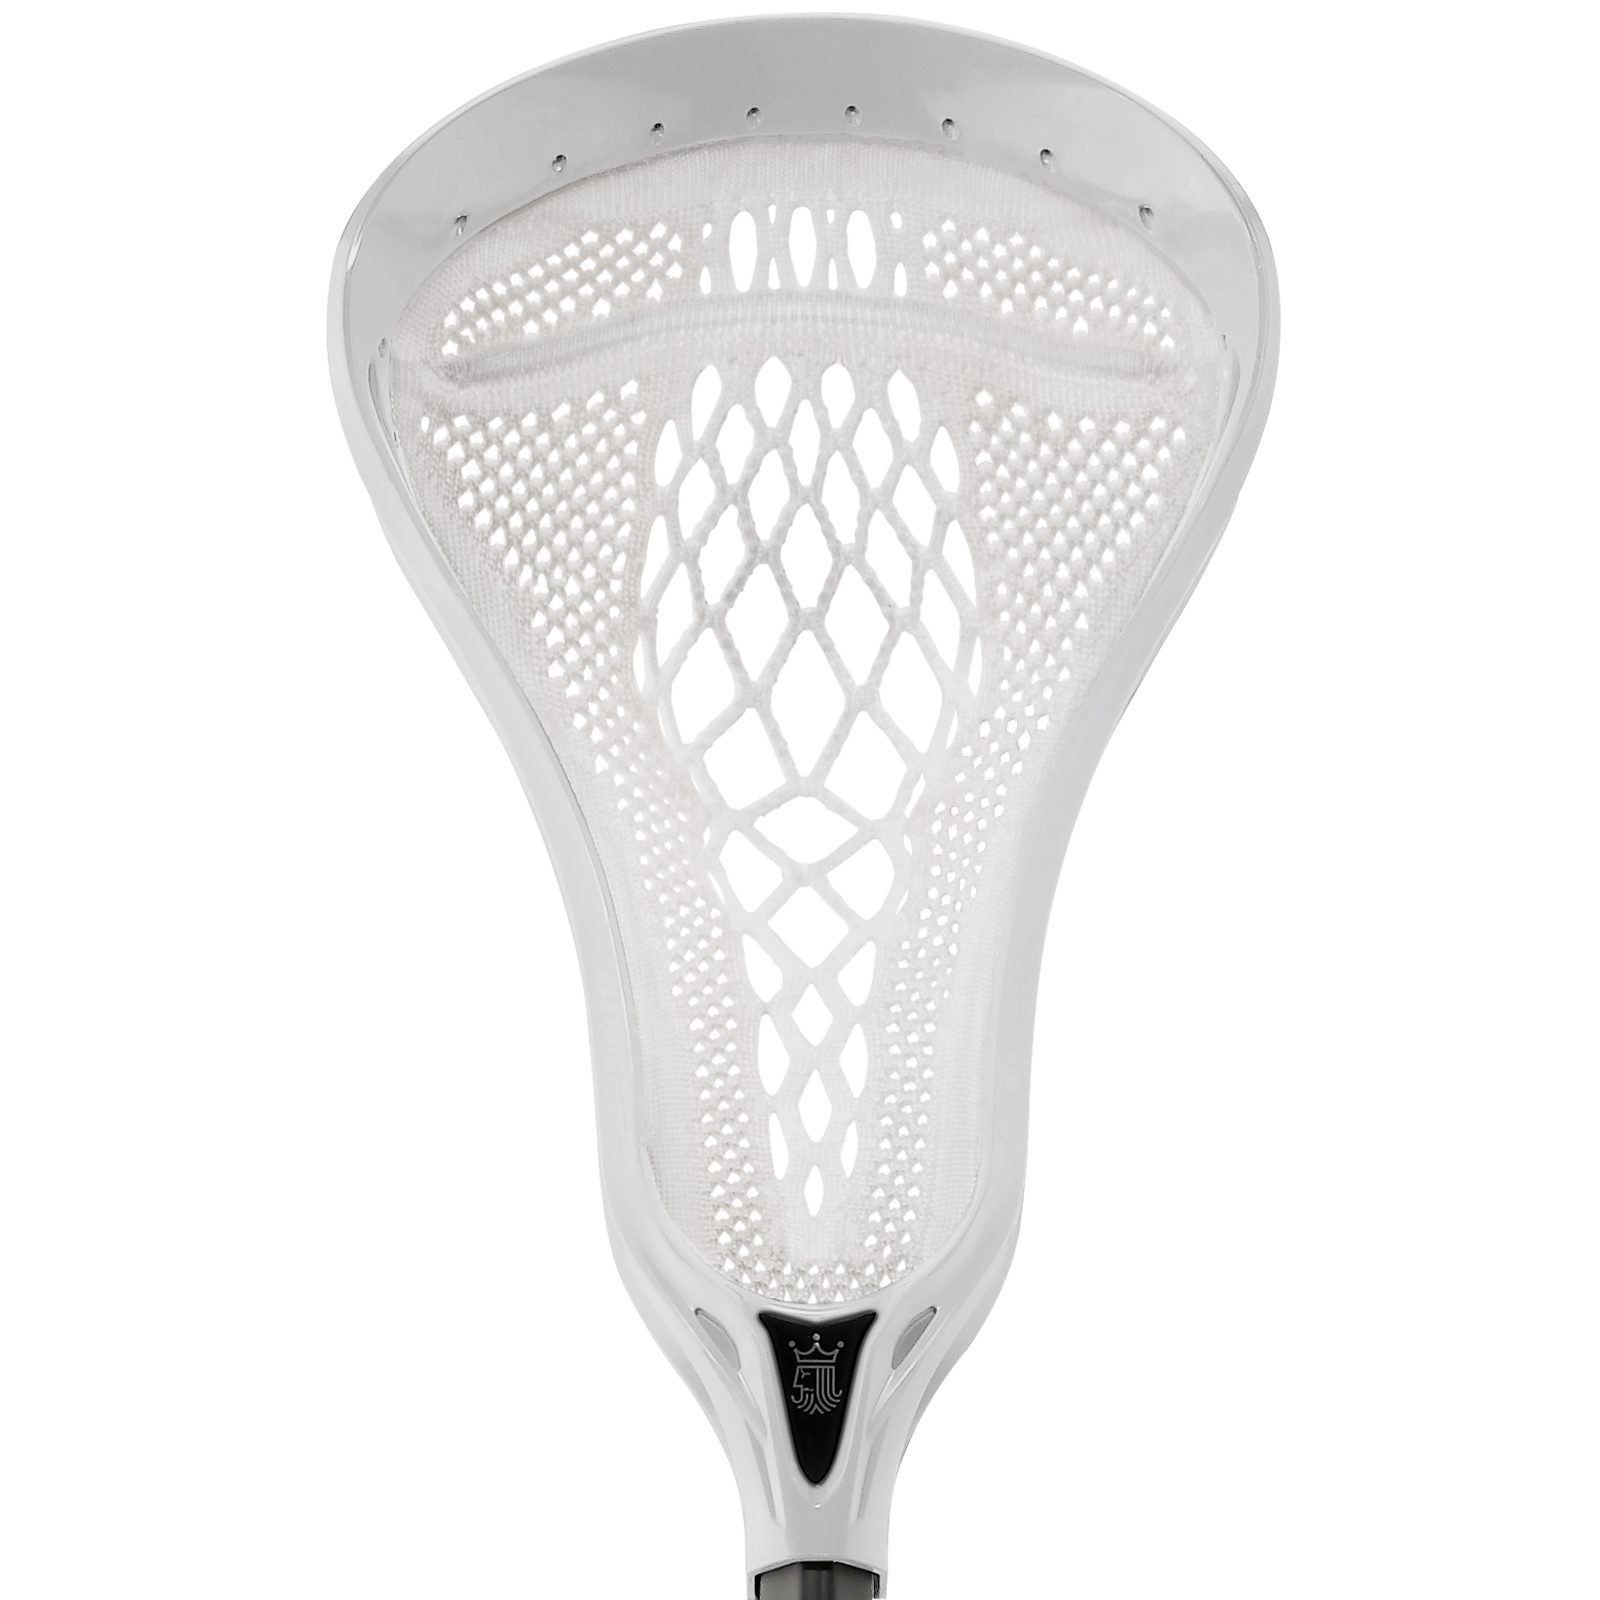 Brine Dynasty Warp Pro (KO Pocket) Strung Lacrosse Head